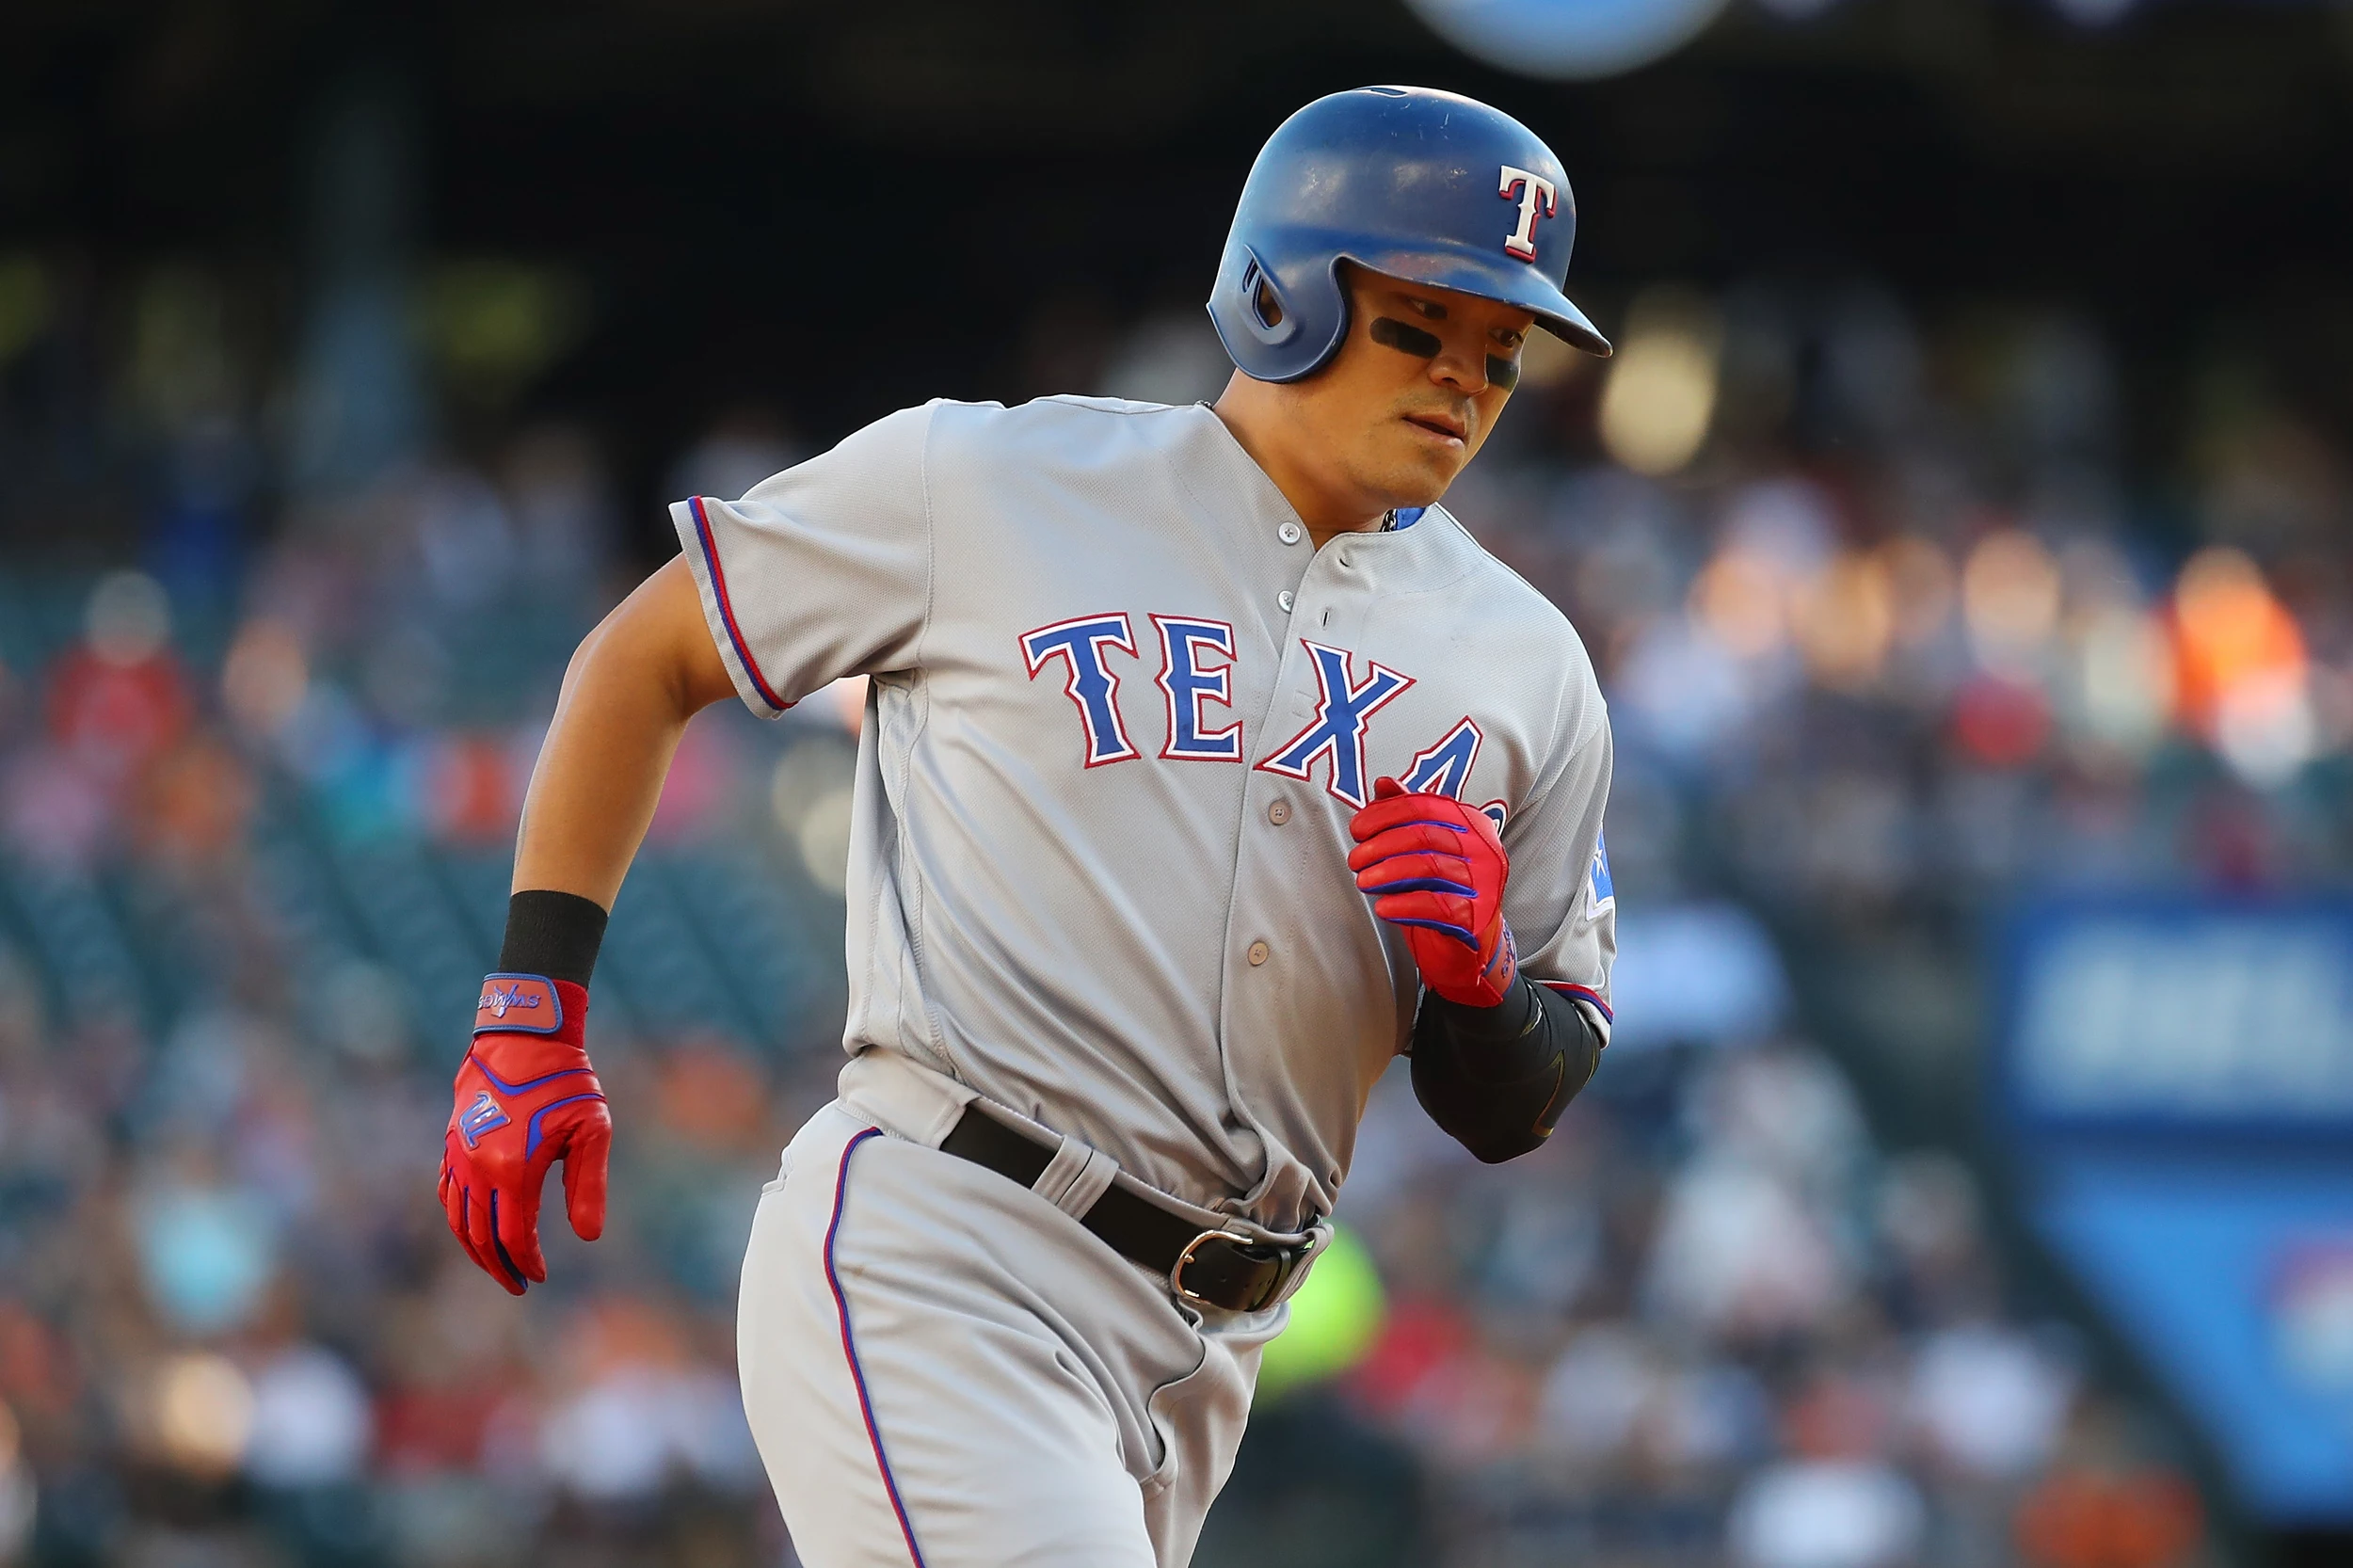 Cover Story: Why Texas Rangers' Outfielder Shin-Soo Choo Will